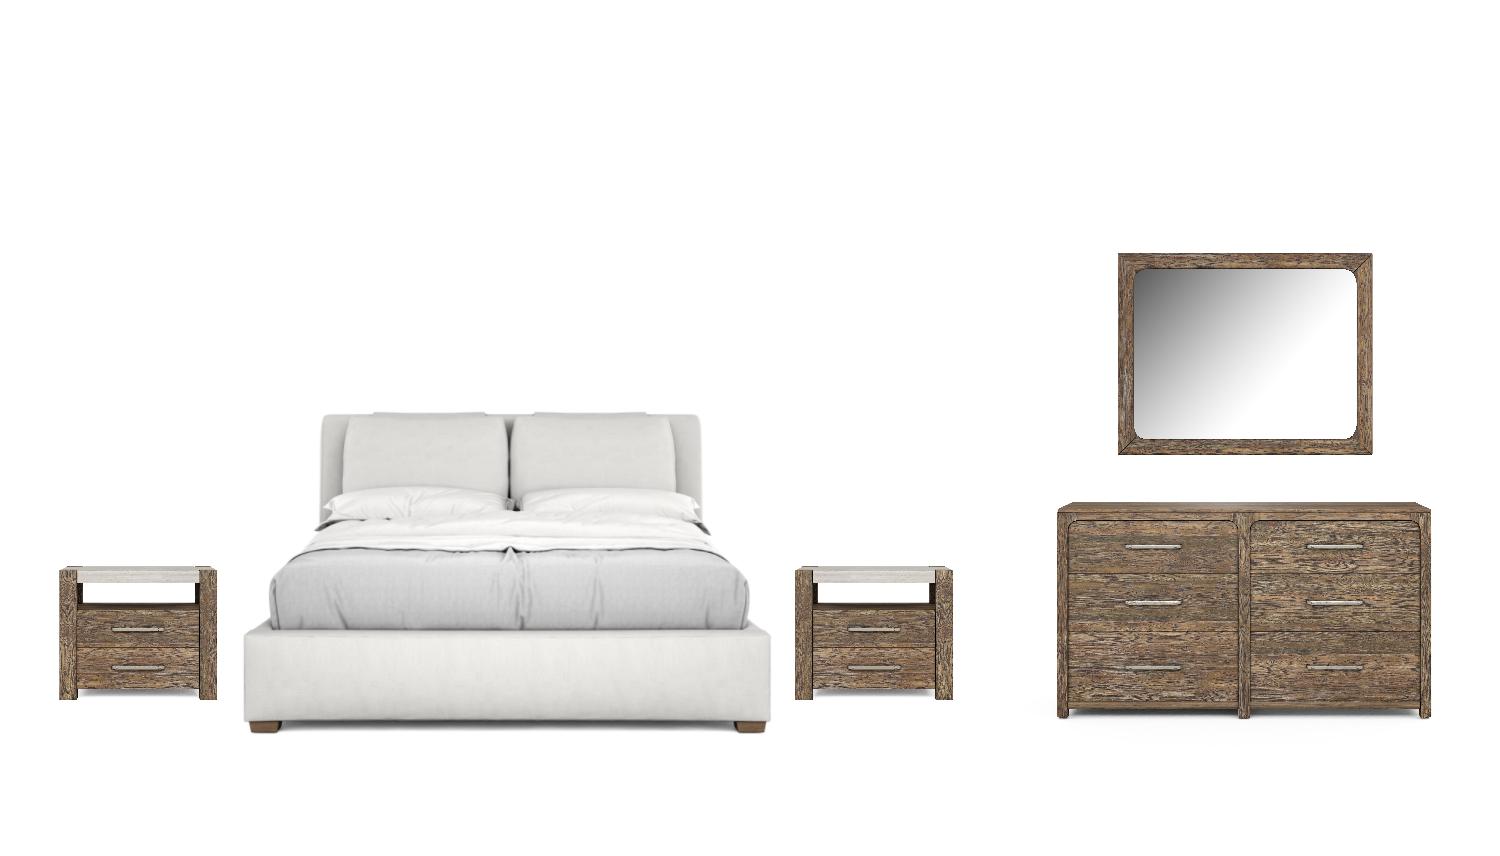 Modern, Transitional Platform Bedroom Set Stockyard 284125-2303-WH-2NDM-5PCS in Light Gray, White Fabric